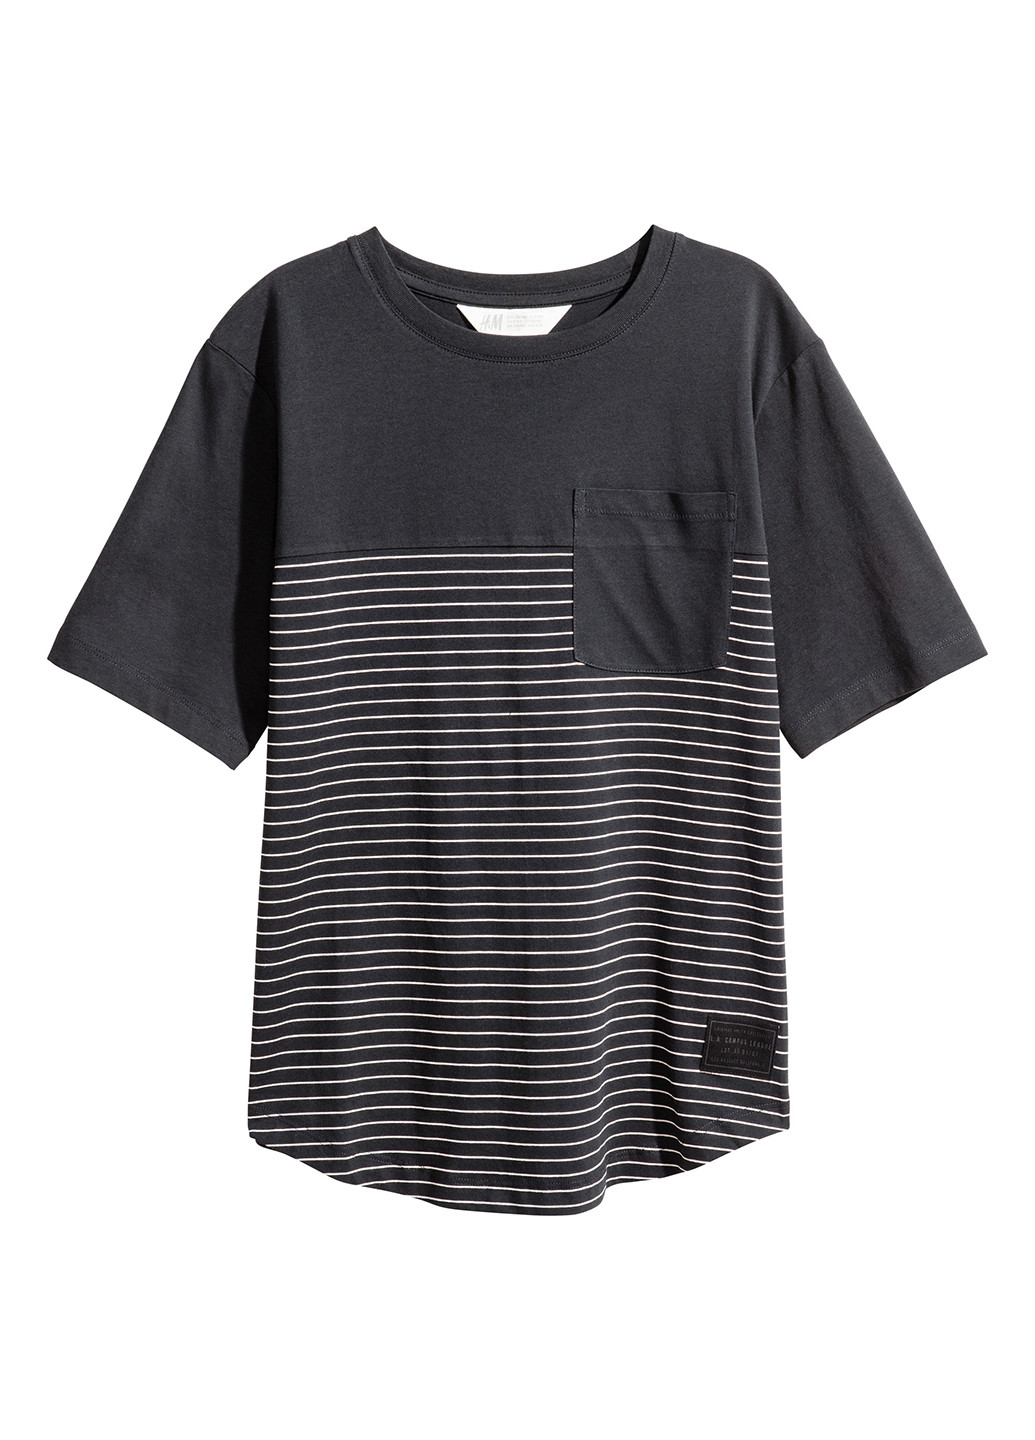 Черная летняя футболка с коротким рукавом H&M